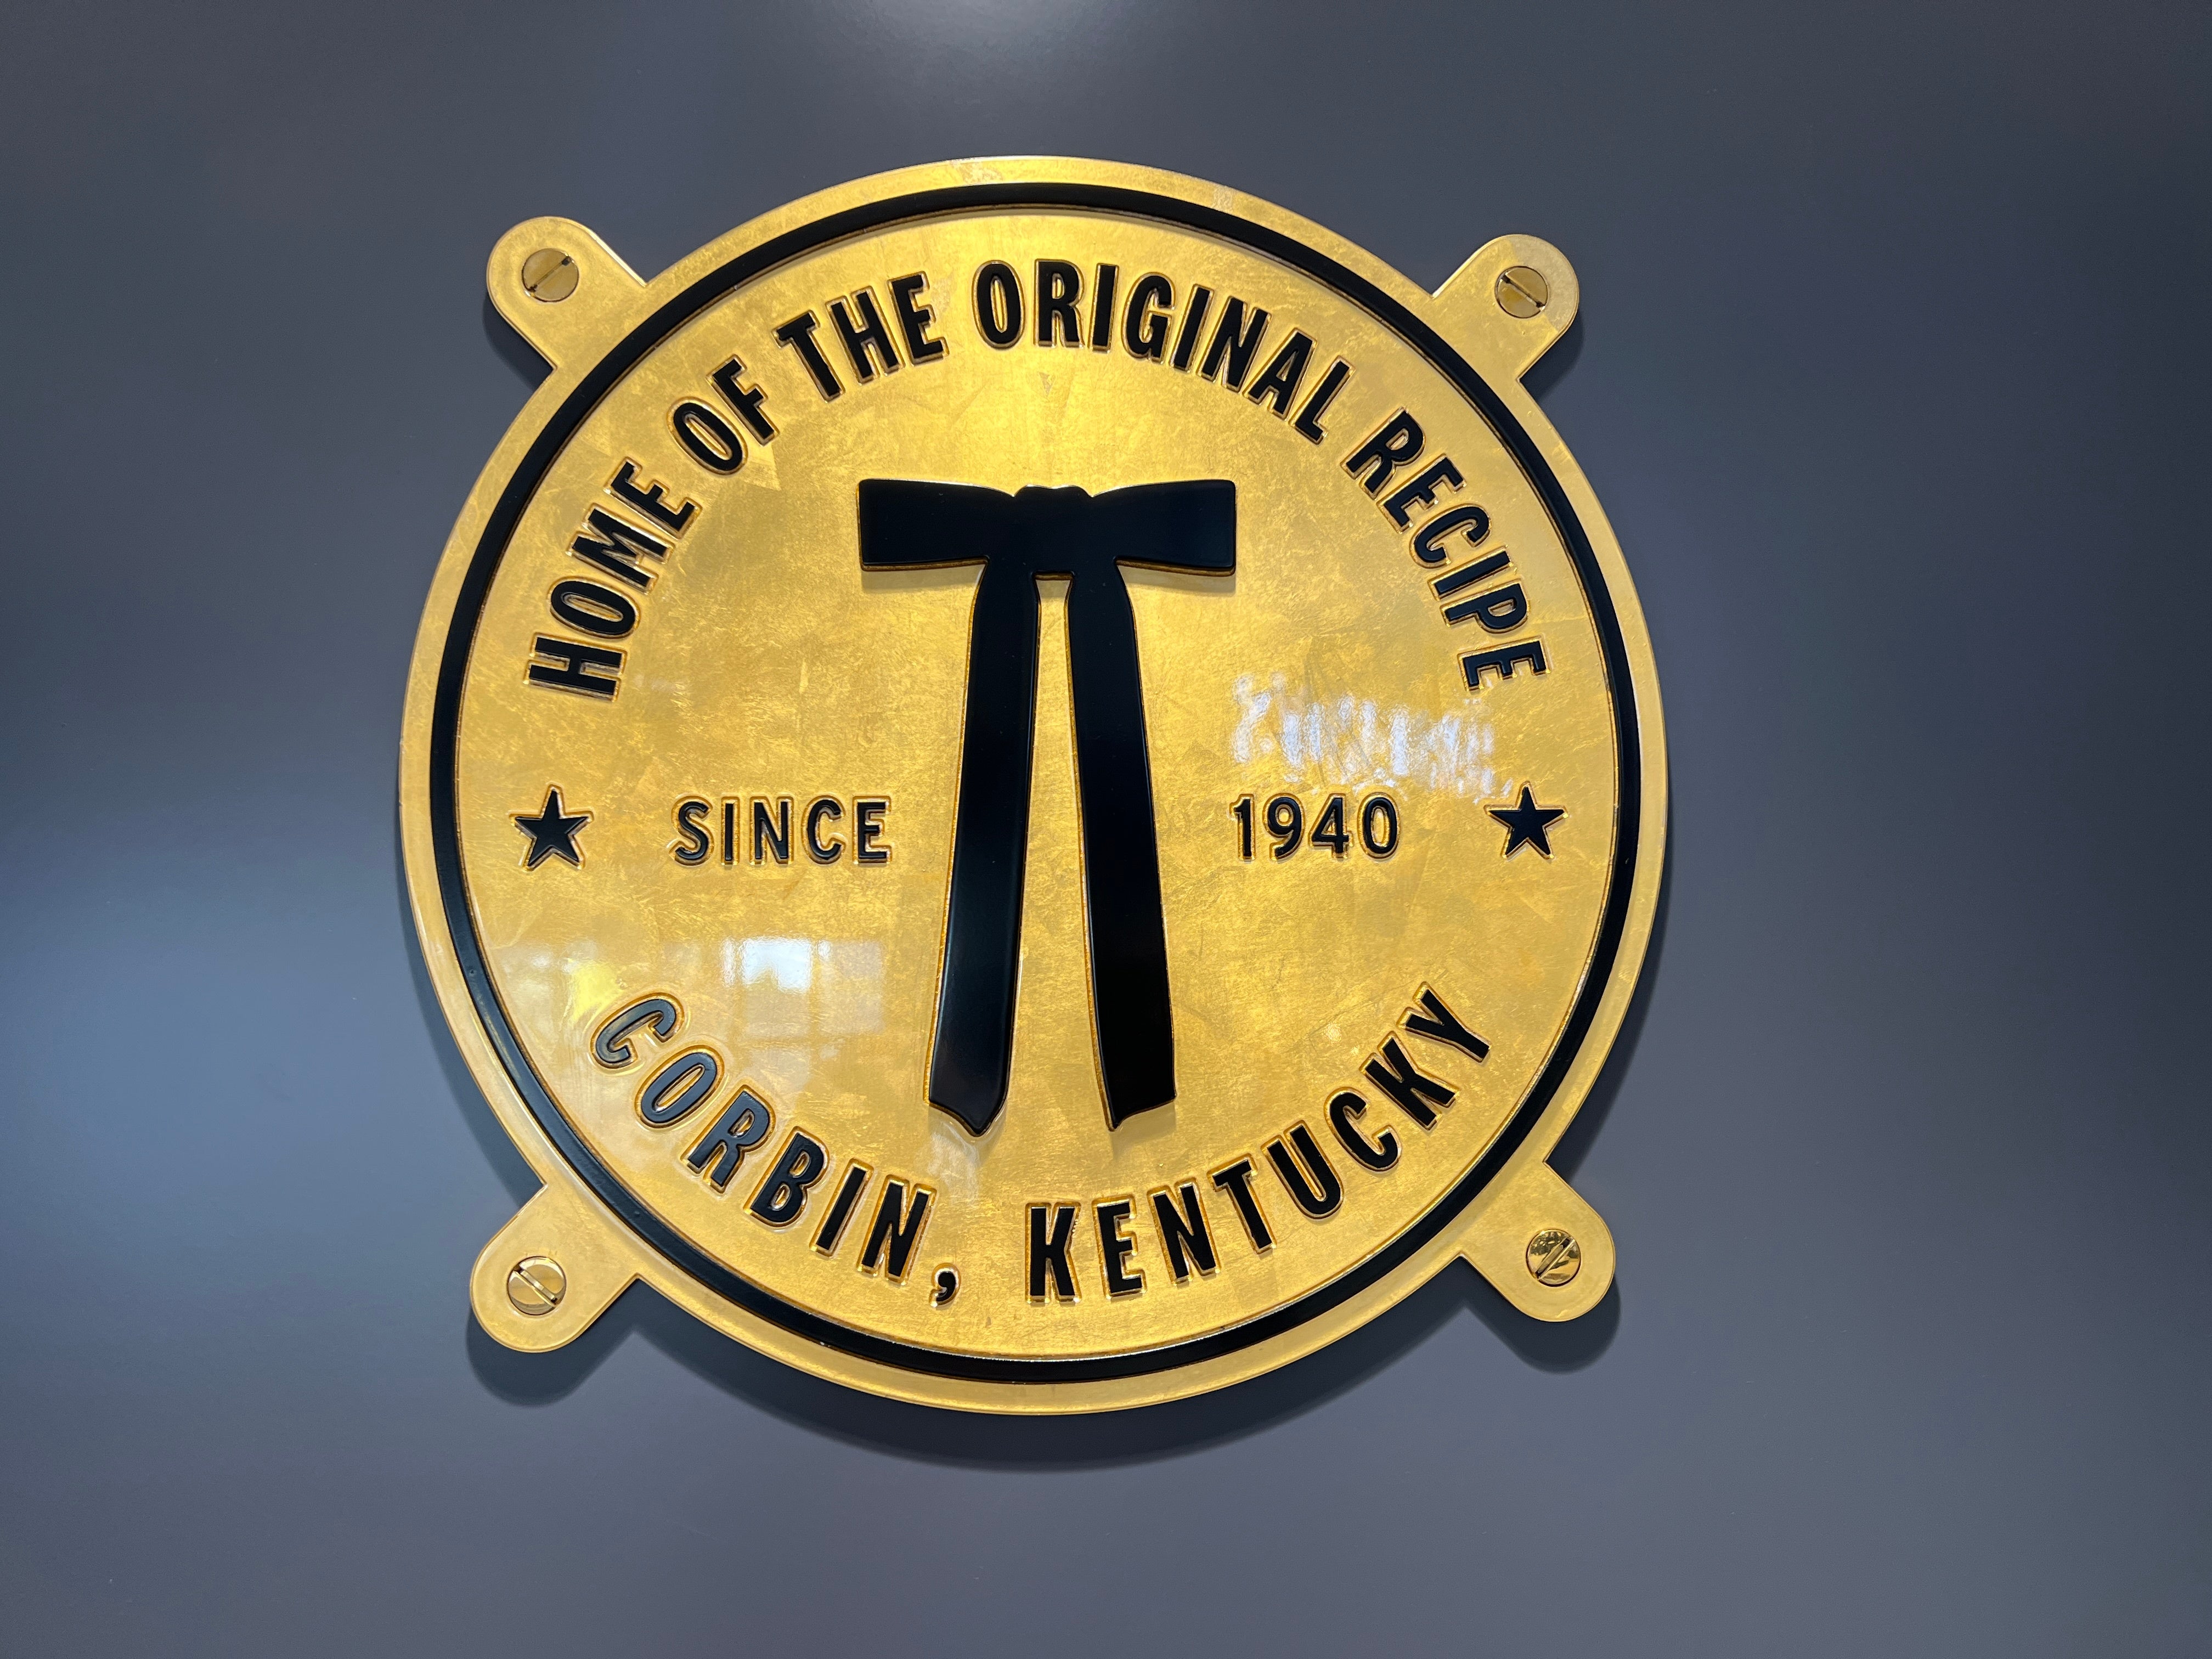 The Kentucky Fried Chicken brand began life in 1940